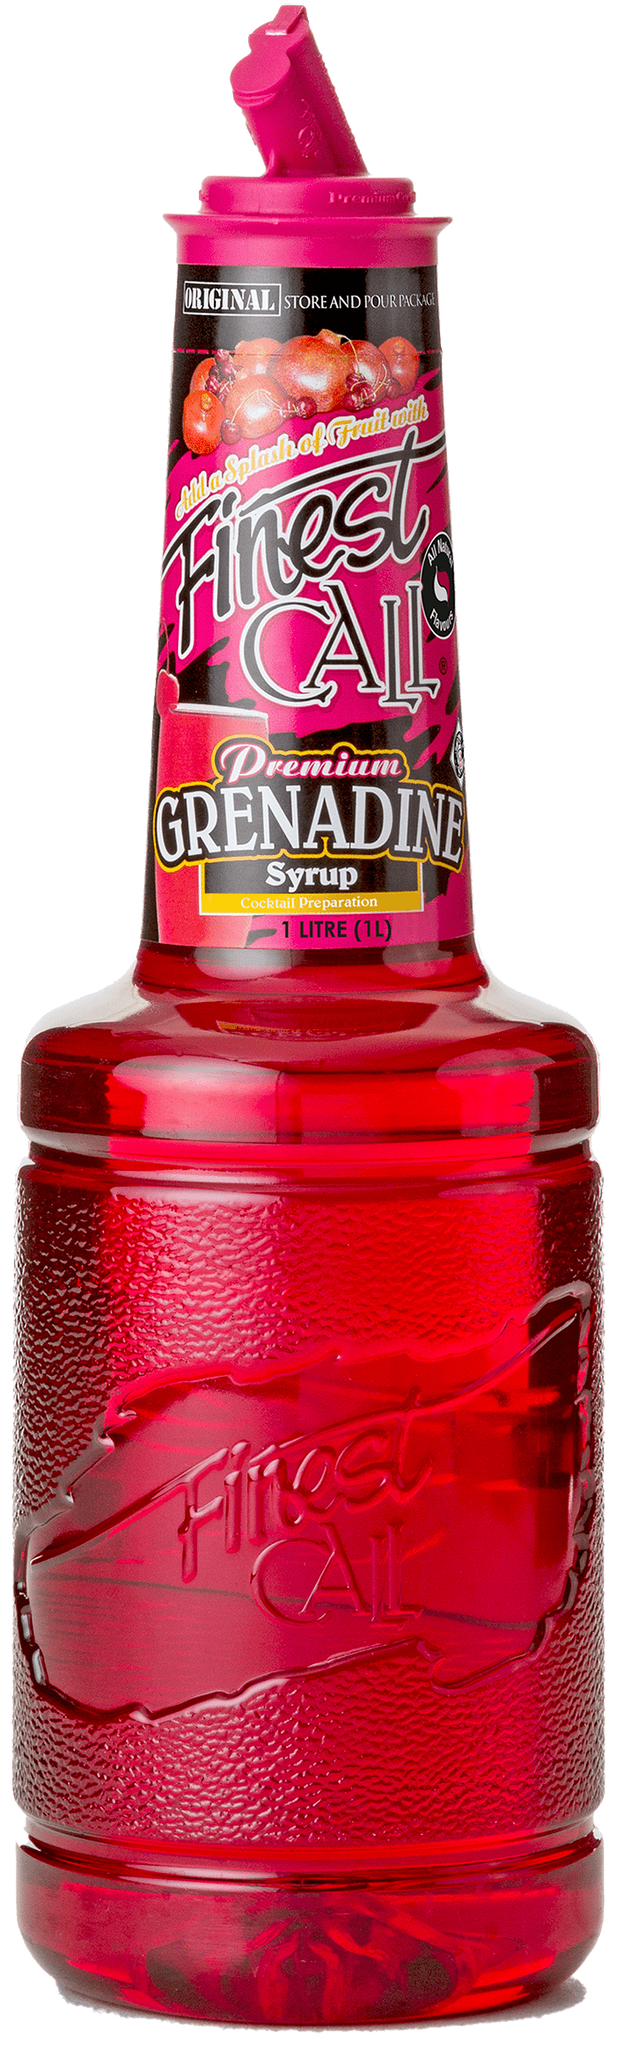 bvi>Mixer, Finest Call Grenadine Syrup